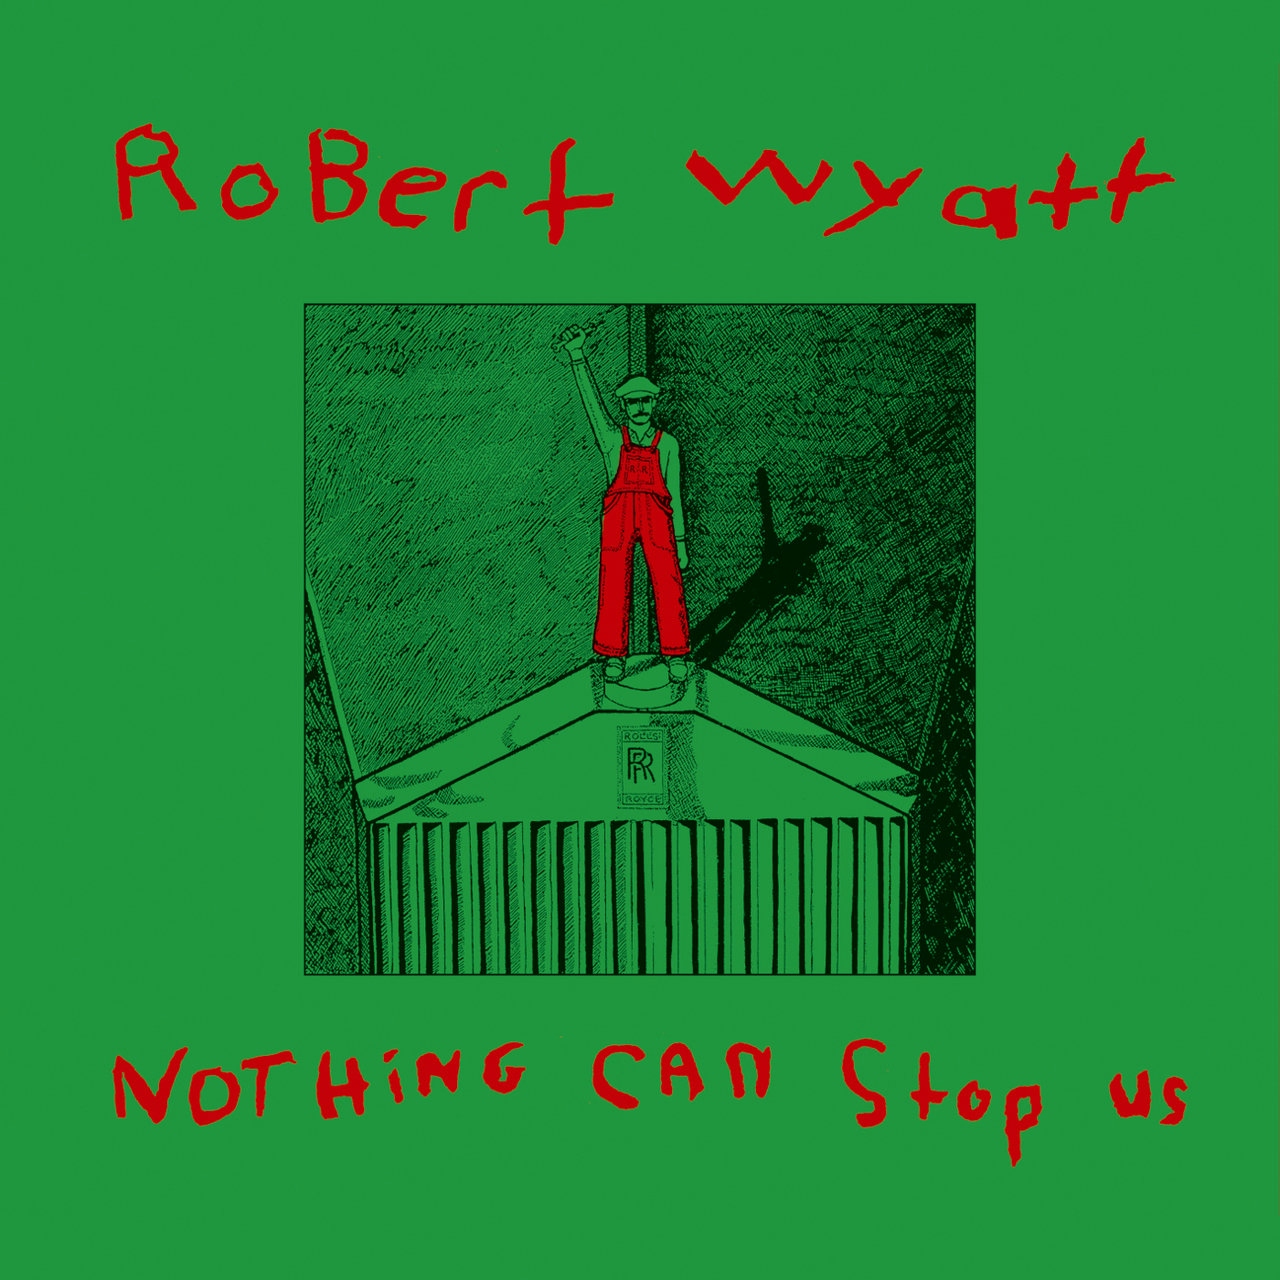 Album artwork for Nothing Can Stop Us by Robert Wyatt